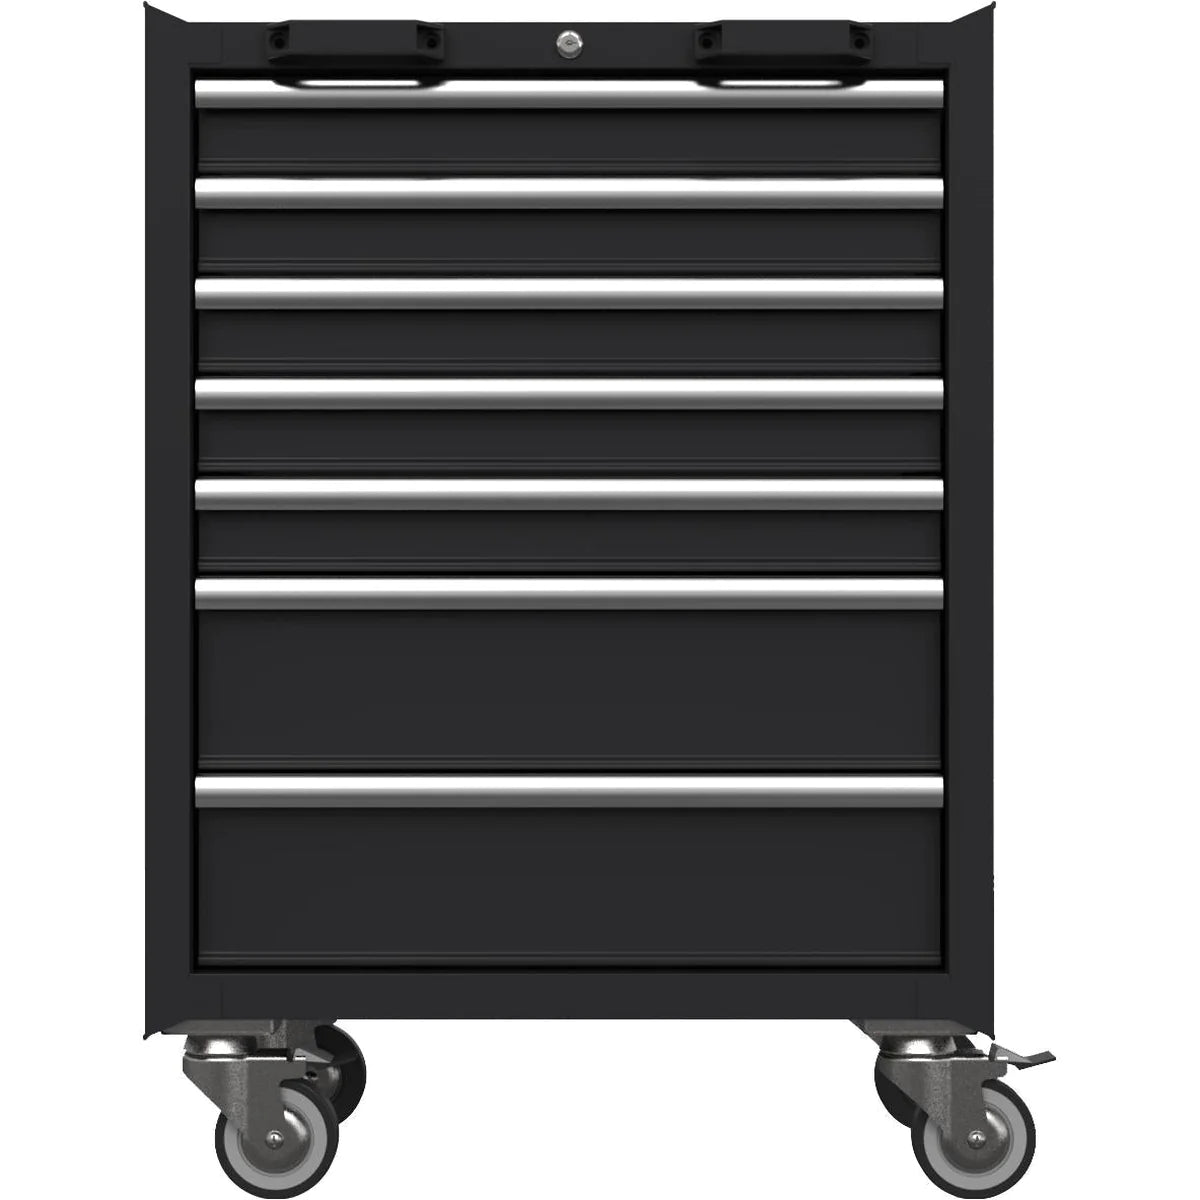 26" 7-Drawer Roller Cabinet with Aluminum Handle, Dark Grey